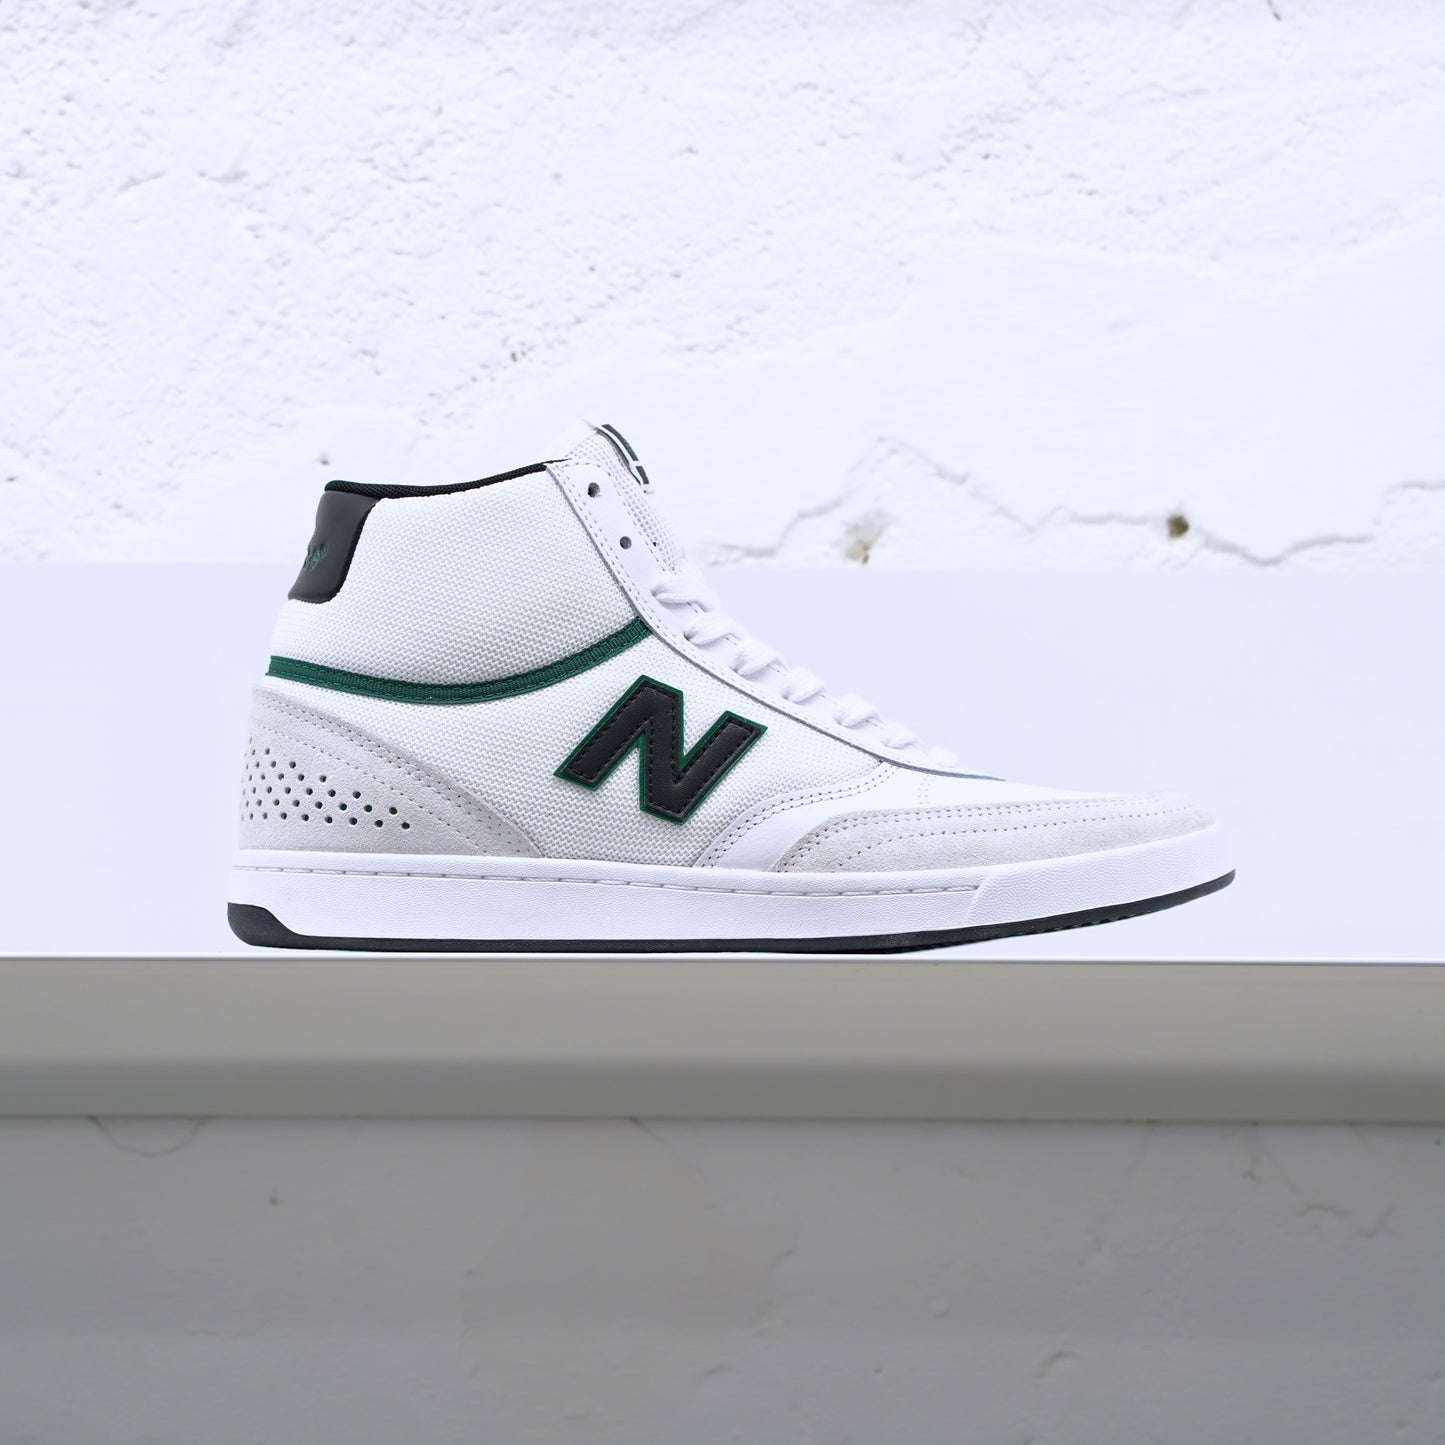 New Balance Numeric - 440 High Shoes - White/Black